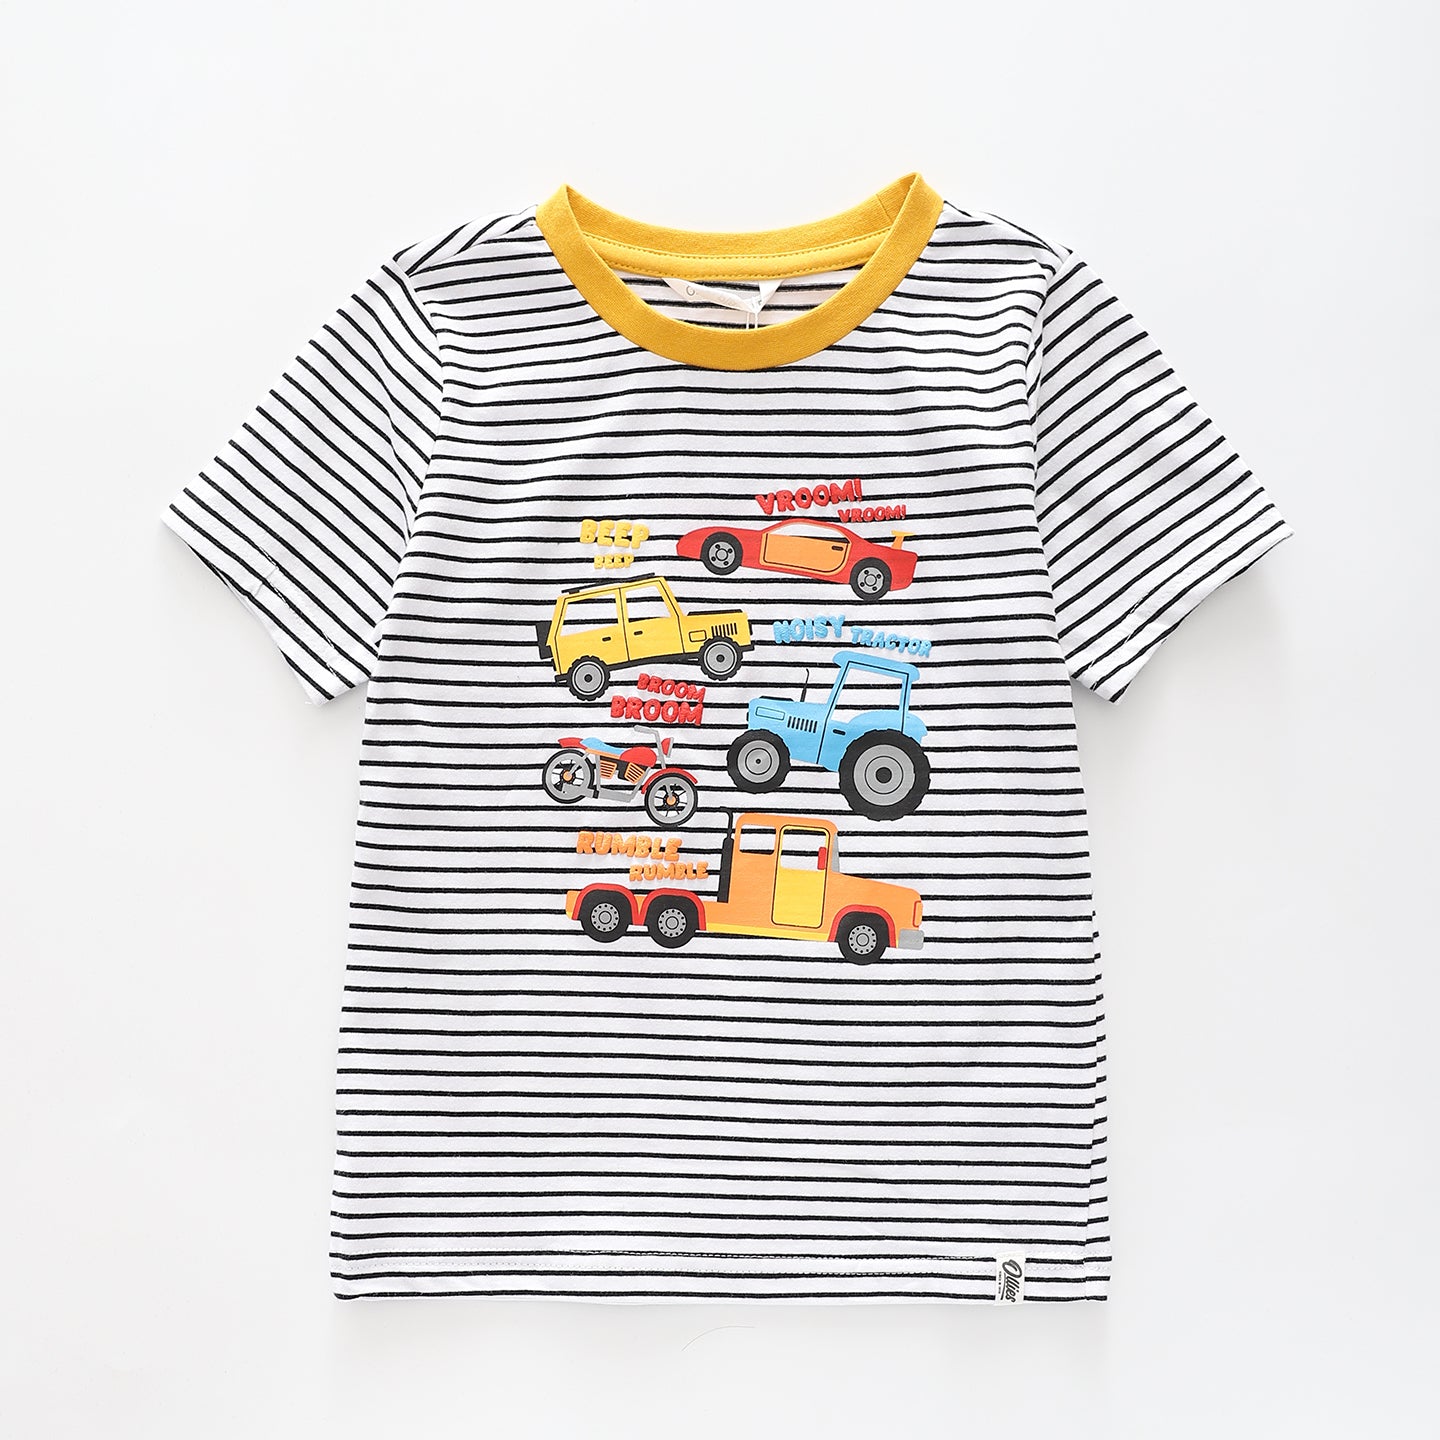 Boy's Black And White Striped Vehicle T-Shirt